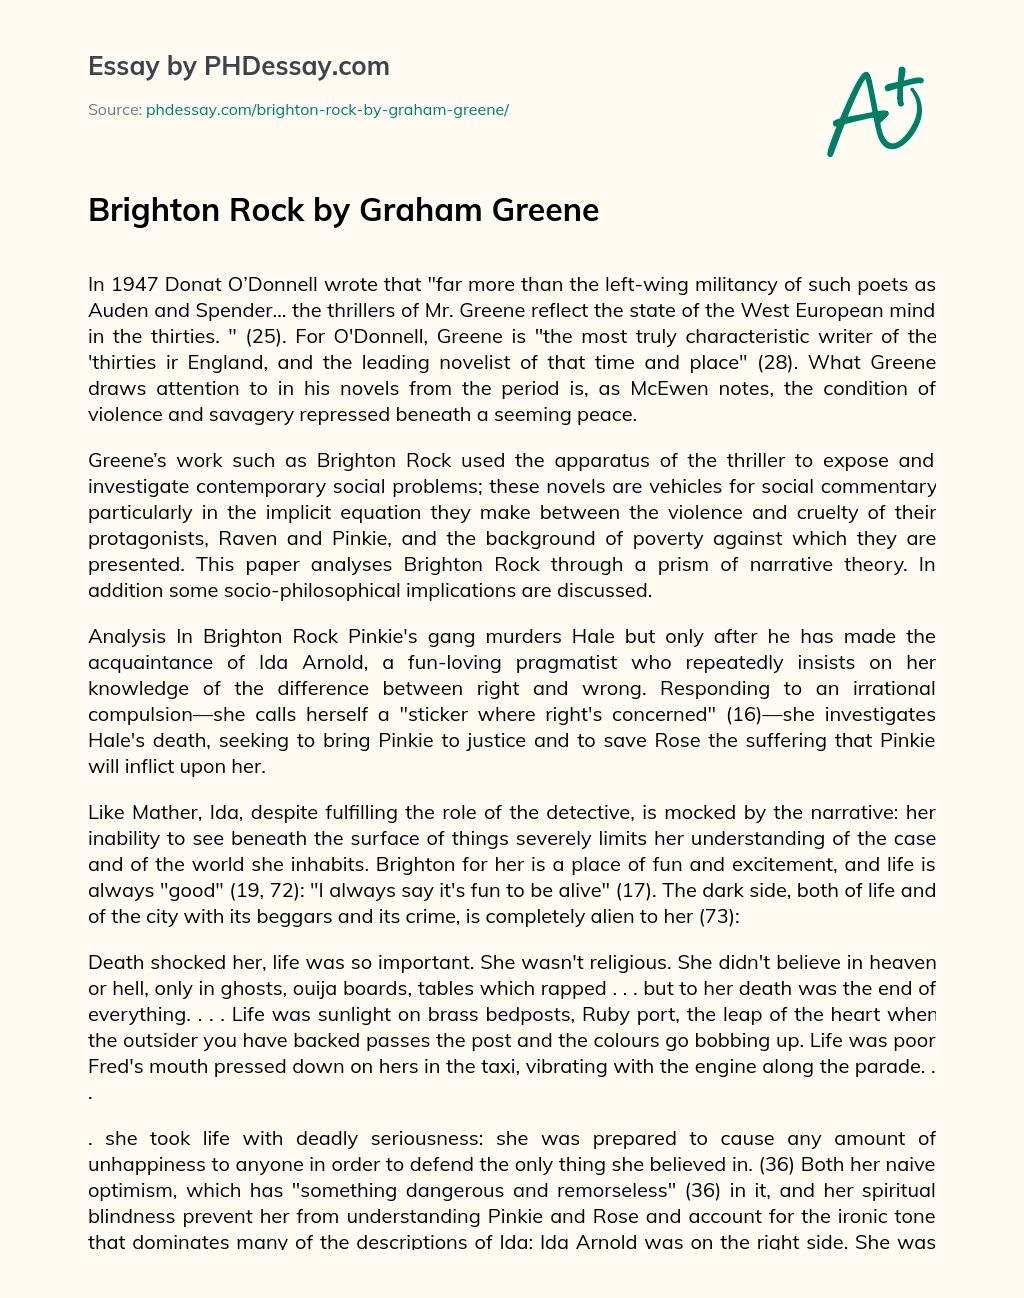 Brighton Rock by Graham Greene essay